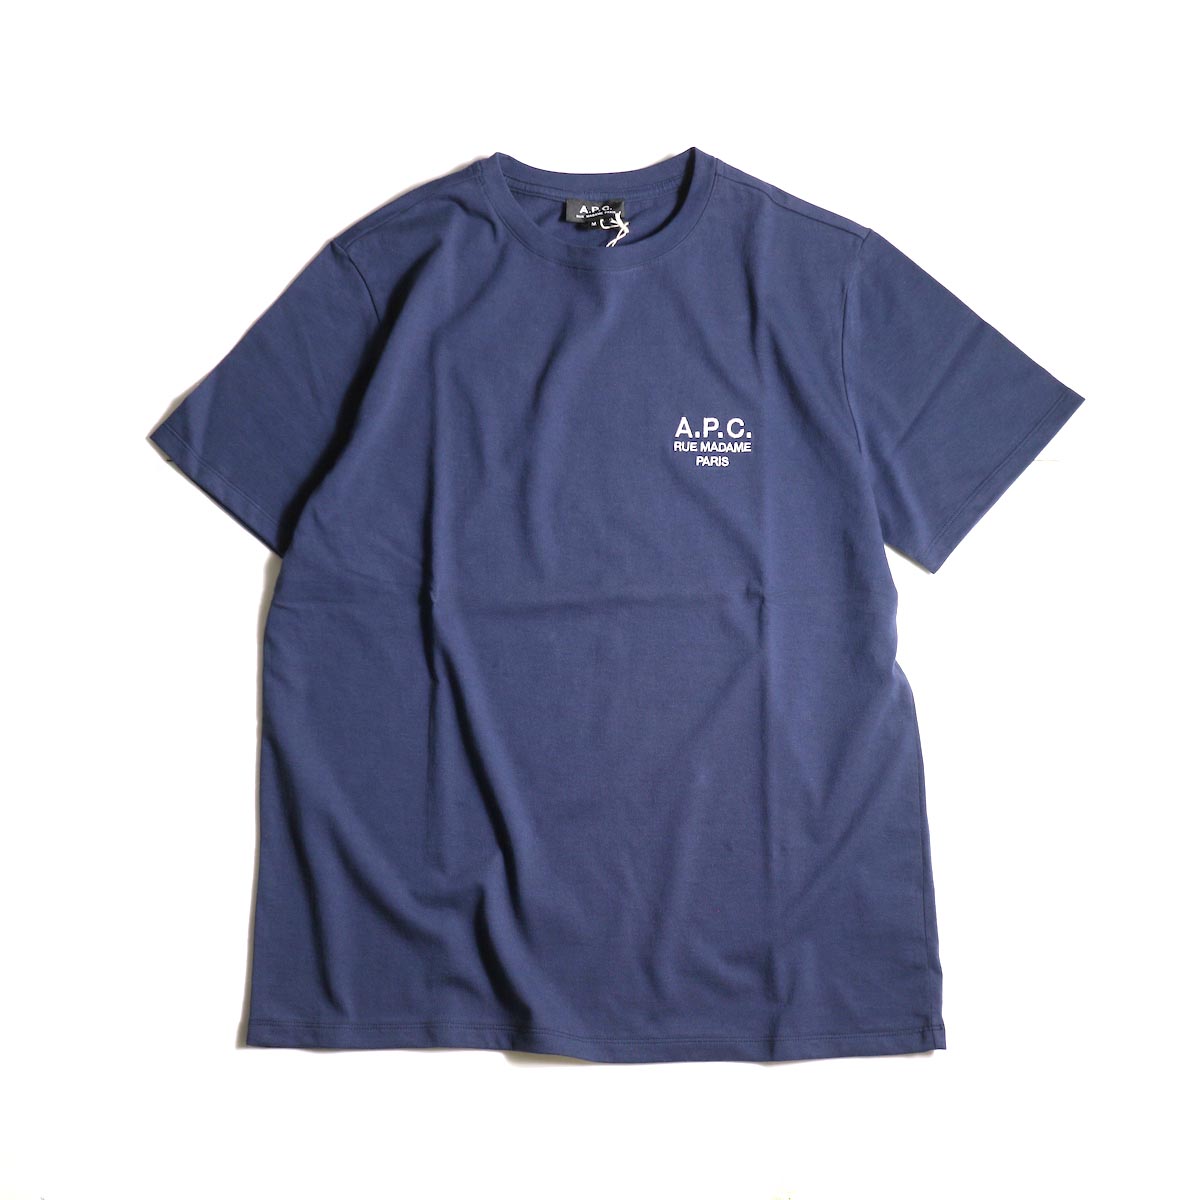 A.P.C. / Crew Neck Tee (Raymond T-shirt) -Navy